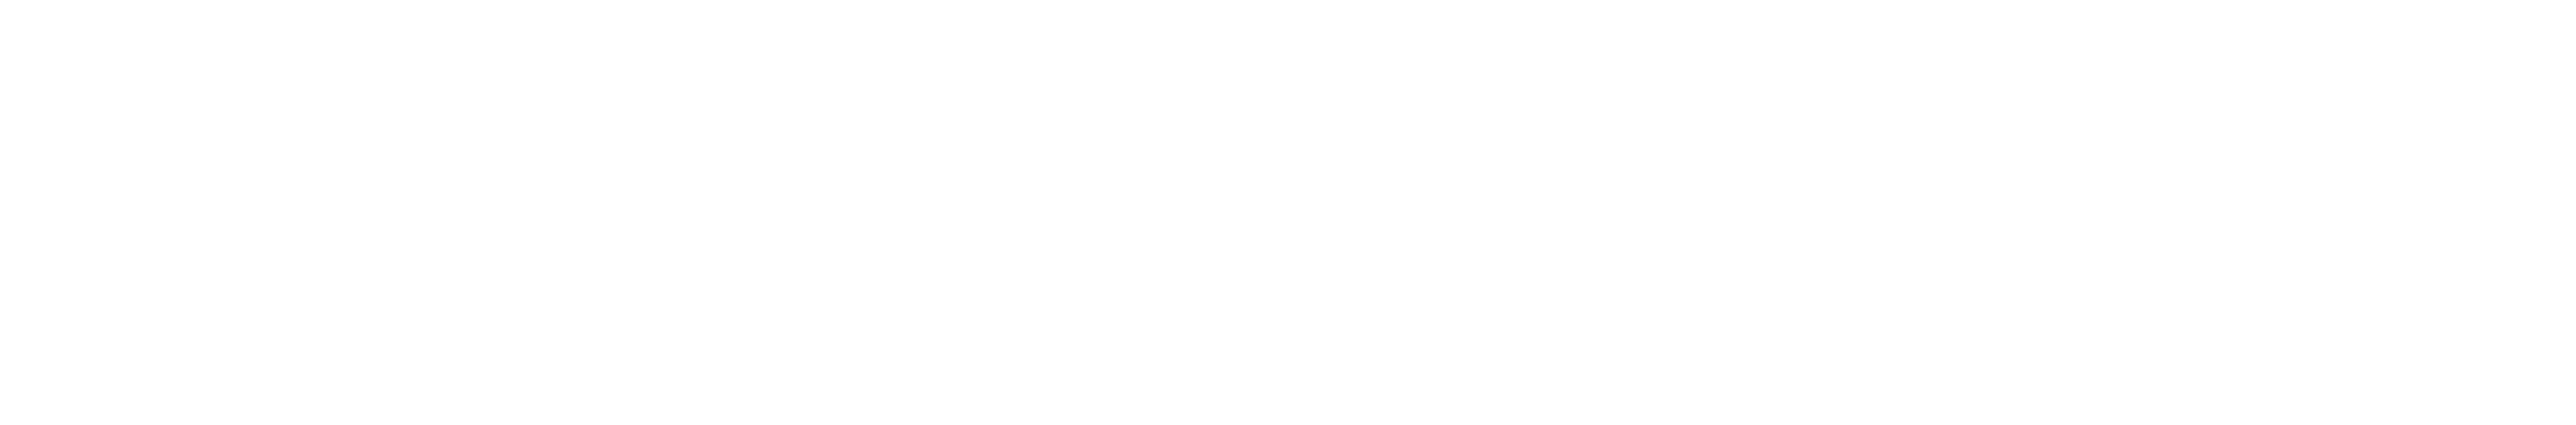 realcount-full-logo-white.81fd3461.png